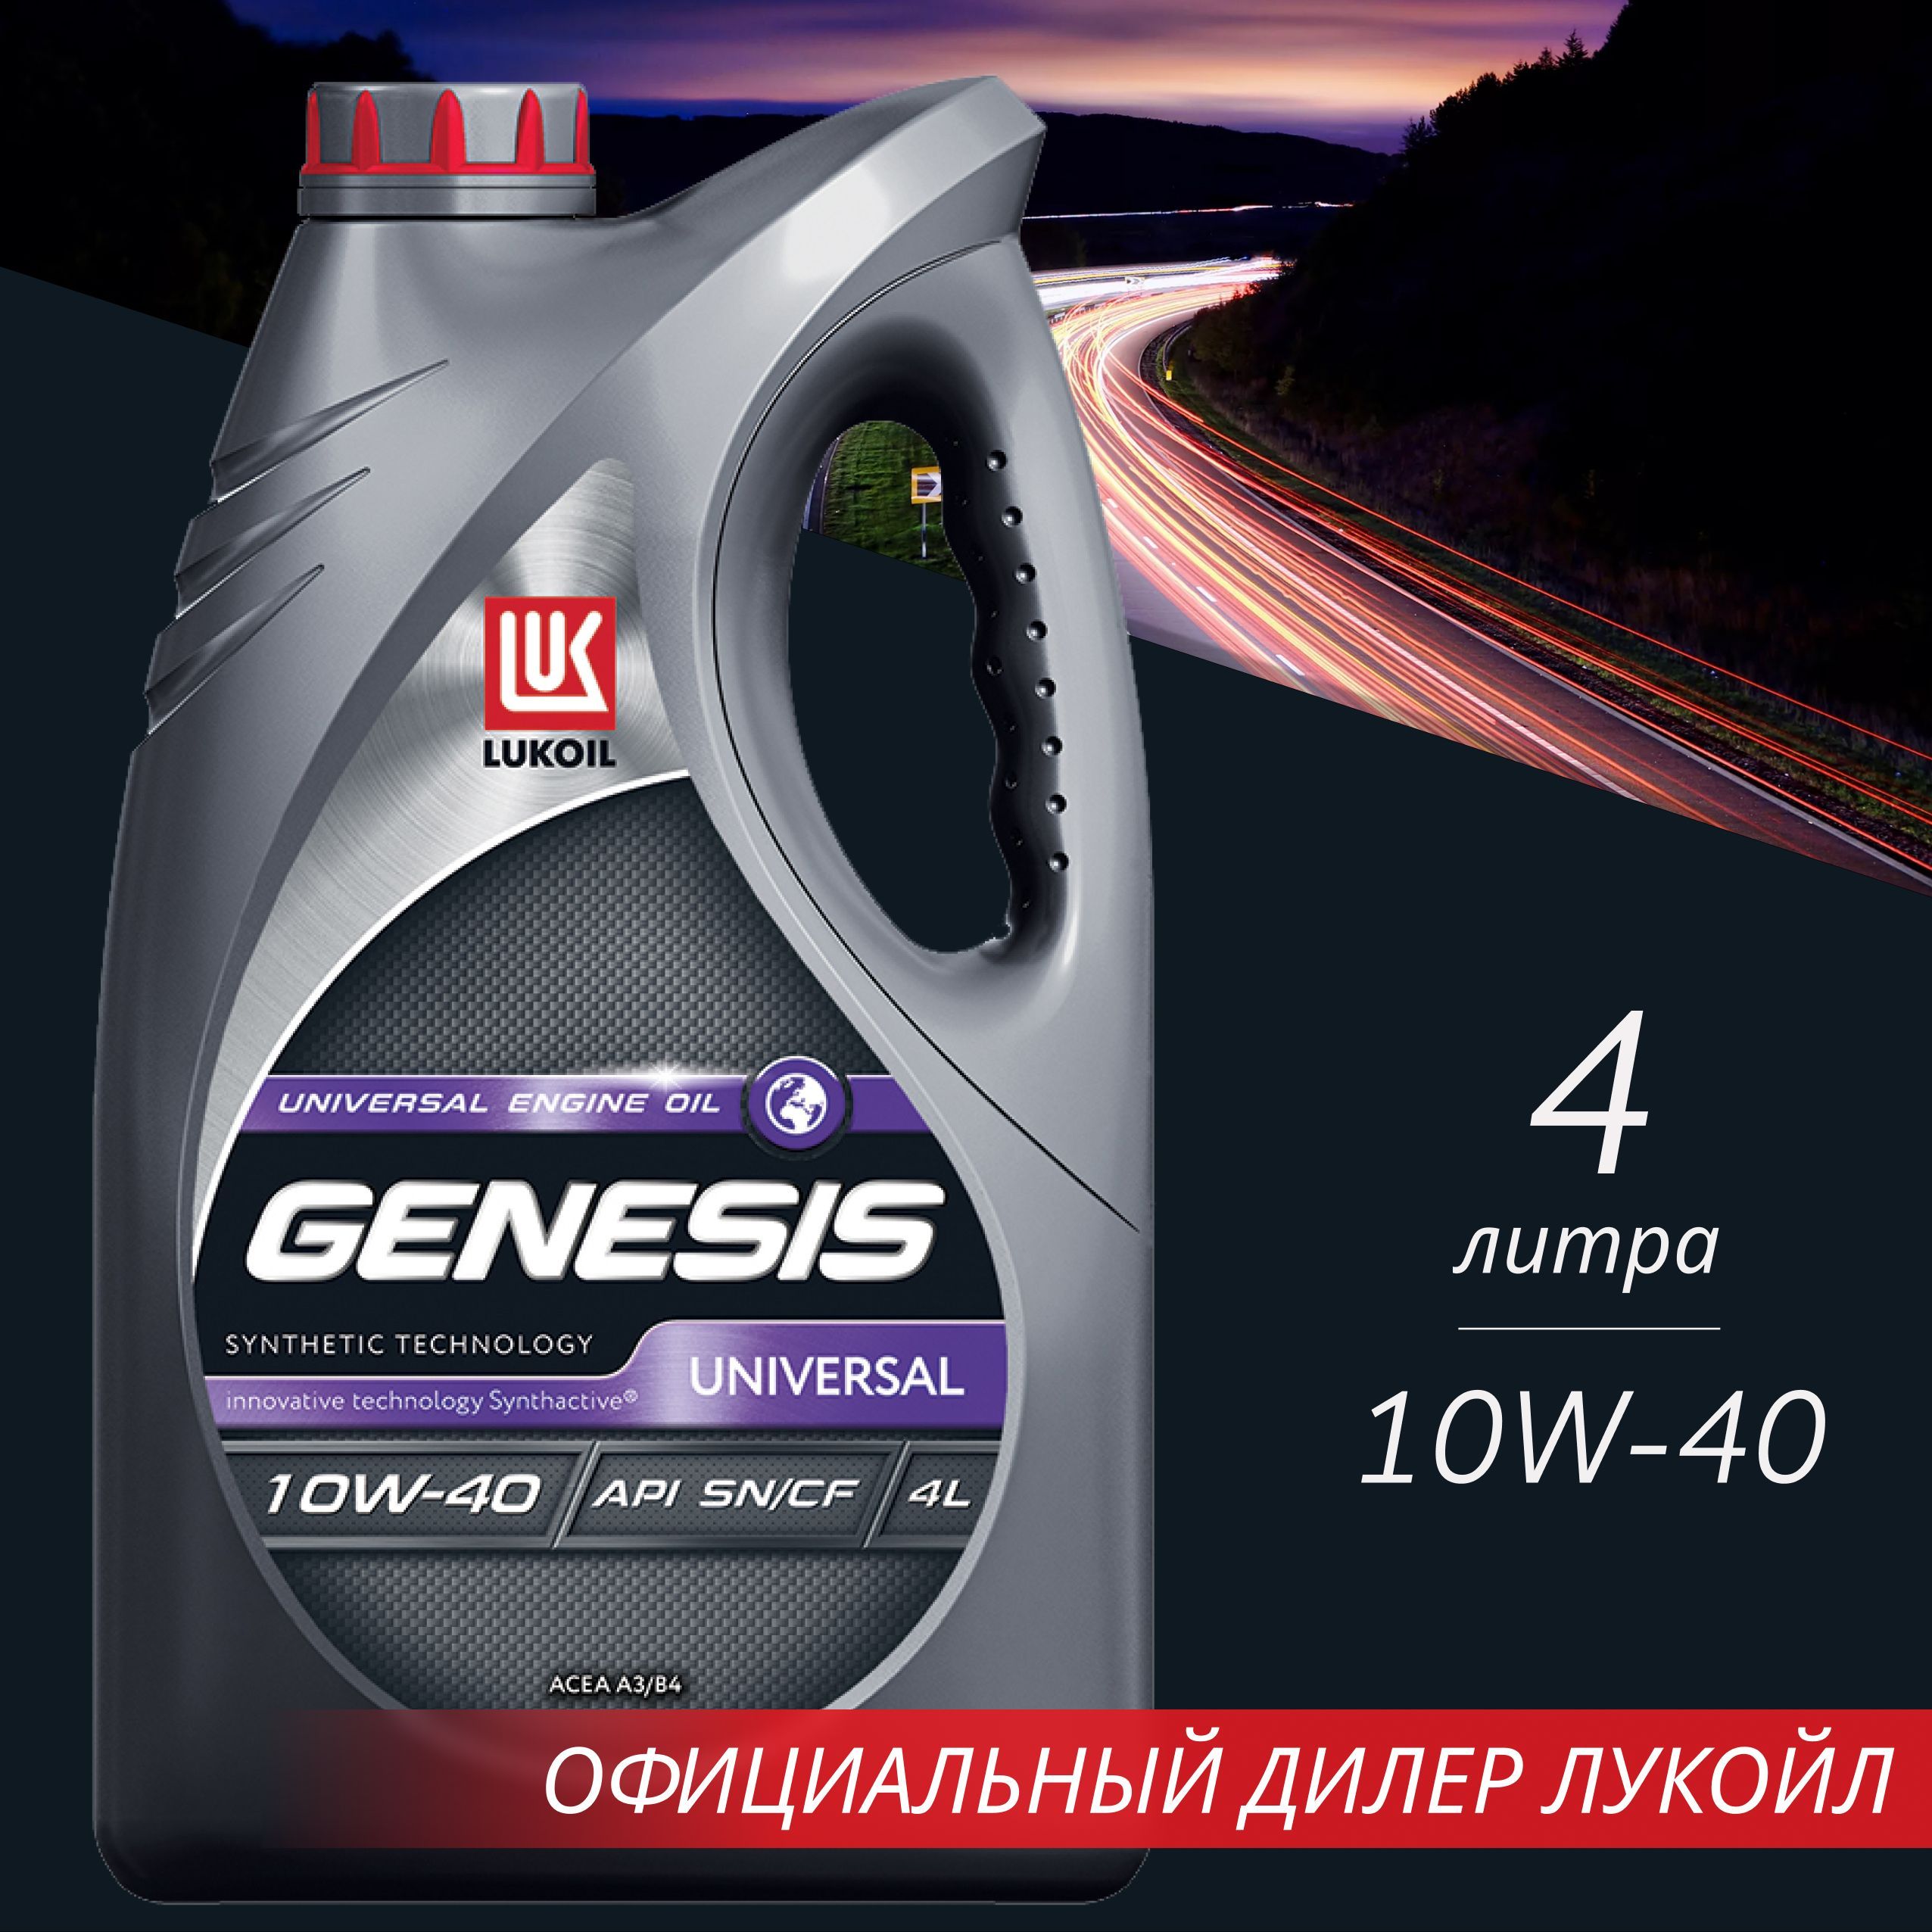 Лукойл 10 40 отзывы. Генезис универсал 10w 40. 3148646 Lukoil Genesis Universal 10w-40 4l. Лукойл Генезис 10w 40 универсал синтетика. Моторное масло Генезис 10w 40 полусинтетика.